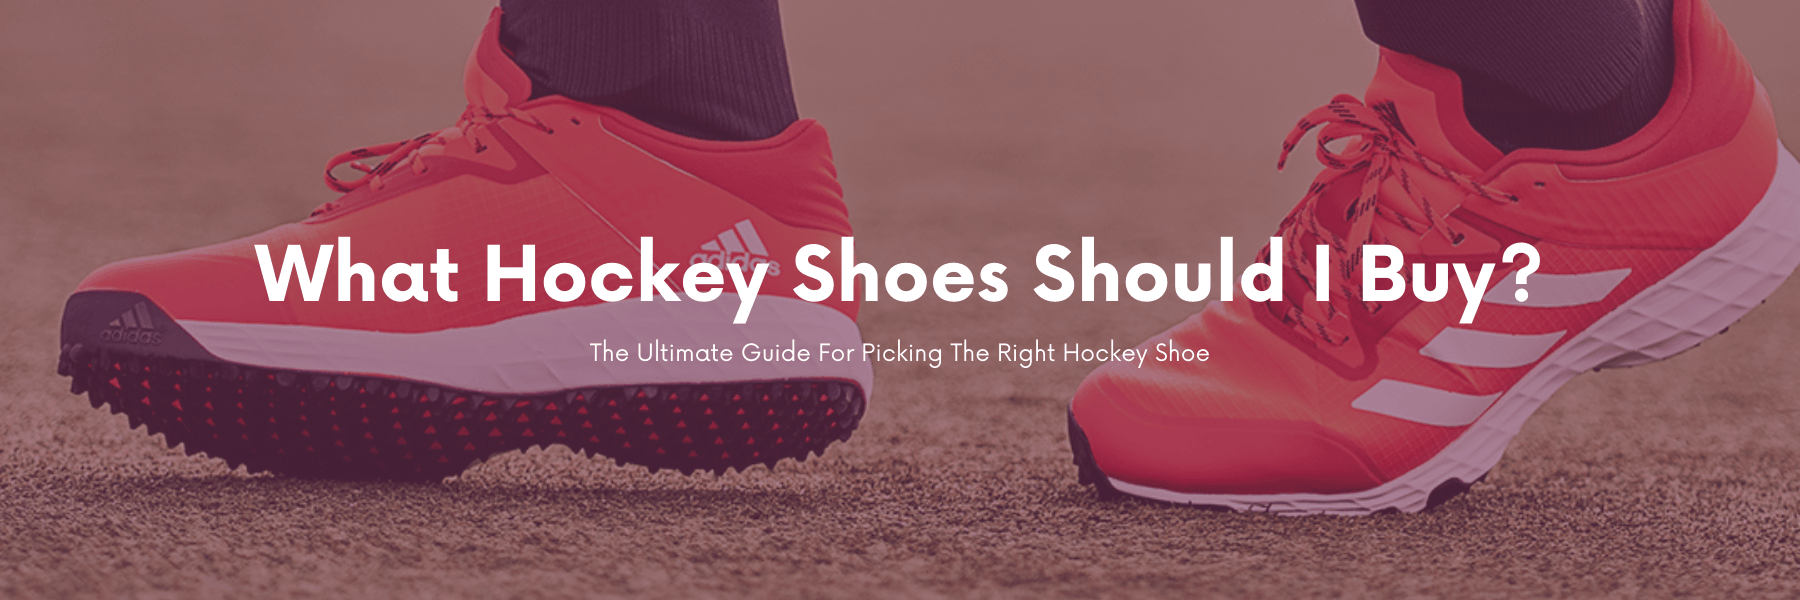 Adidas Field Hockey Shoes